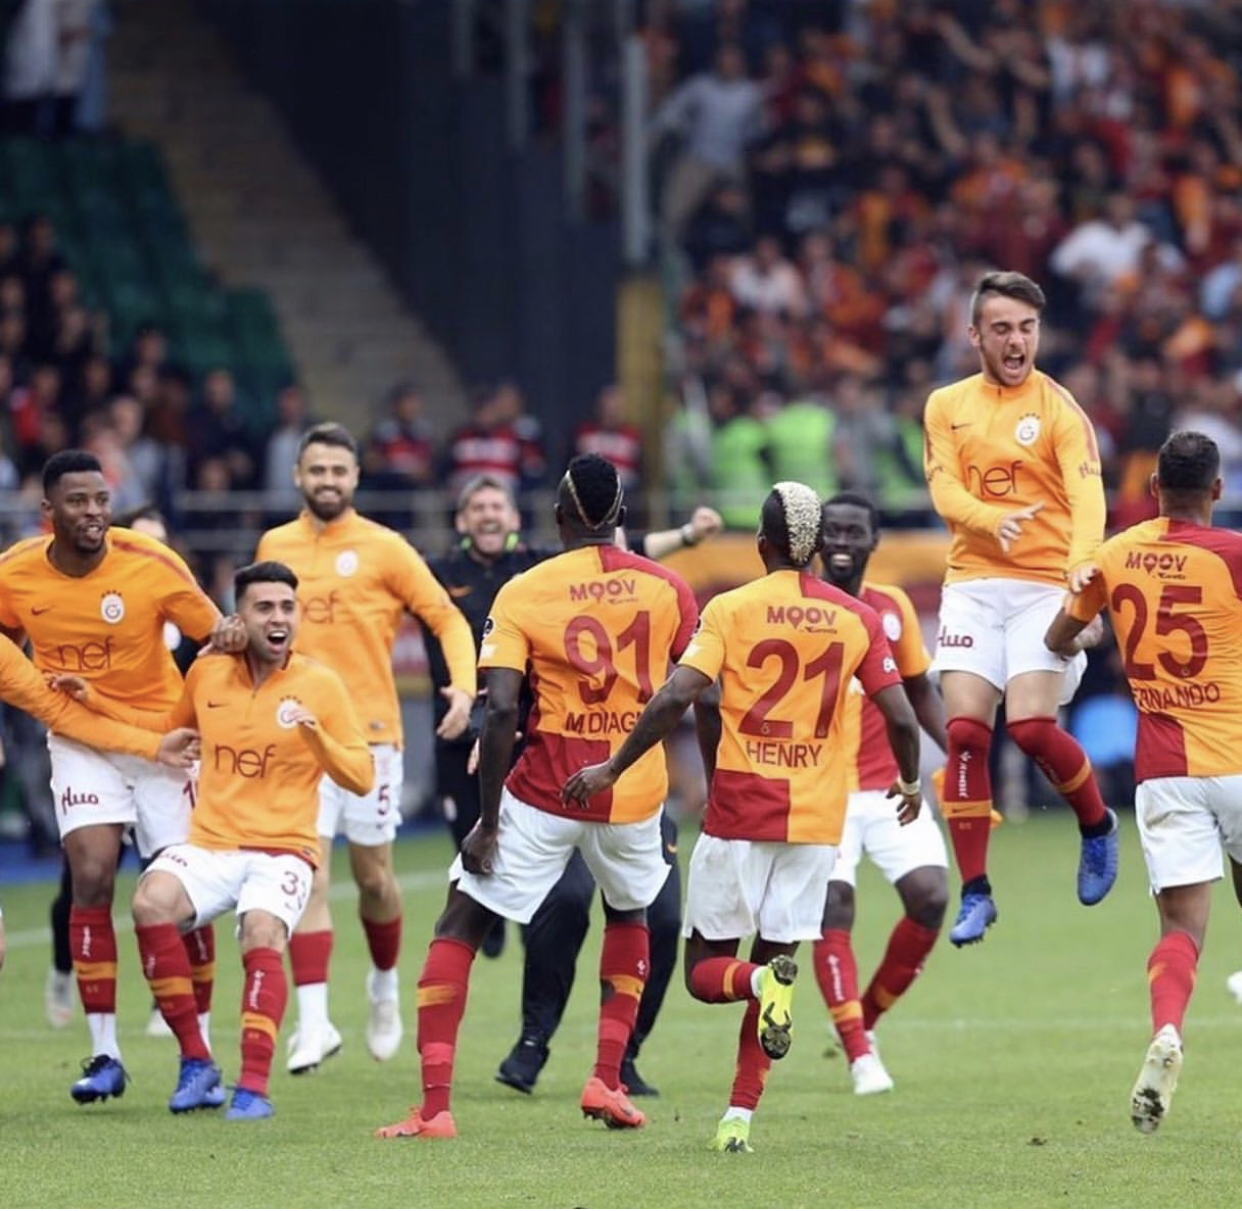 Süper Lig : Galatasaray presque champion après sa victoire contre Basaksehir (2-1)